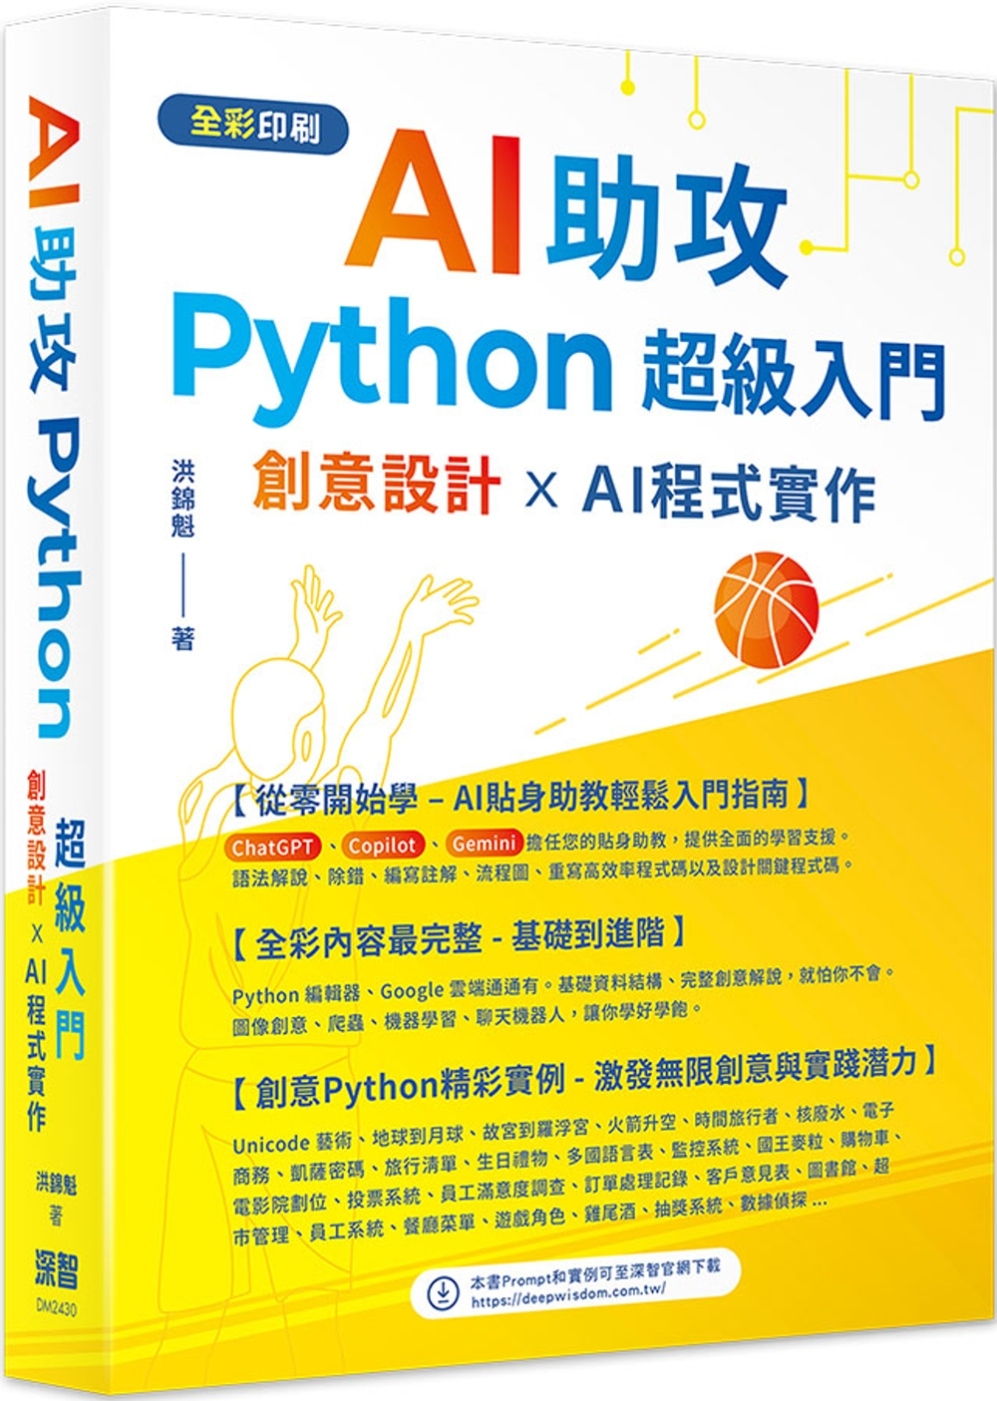 AI助攻 Python超級入門 ...